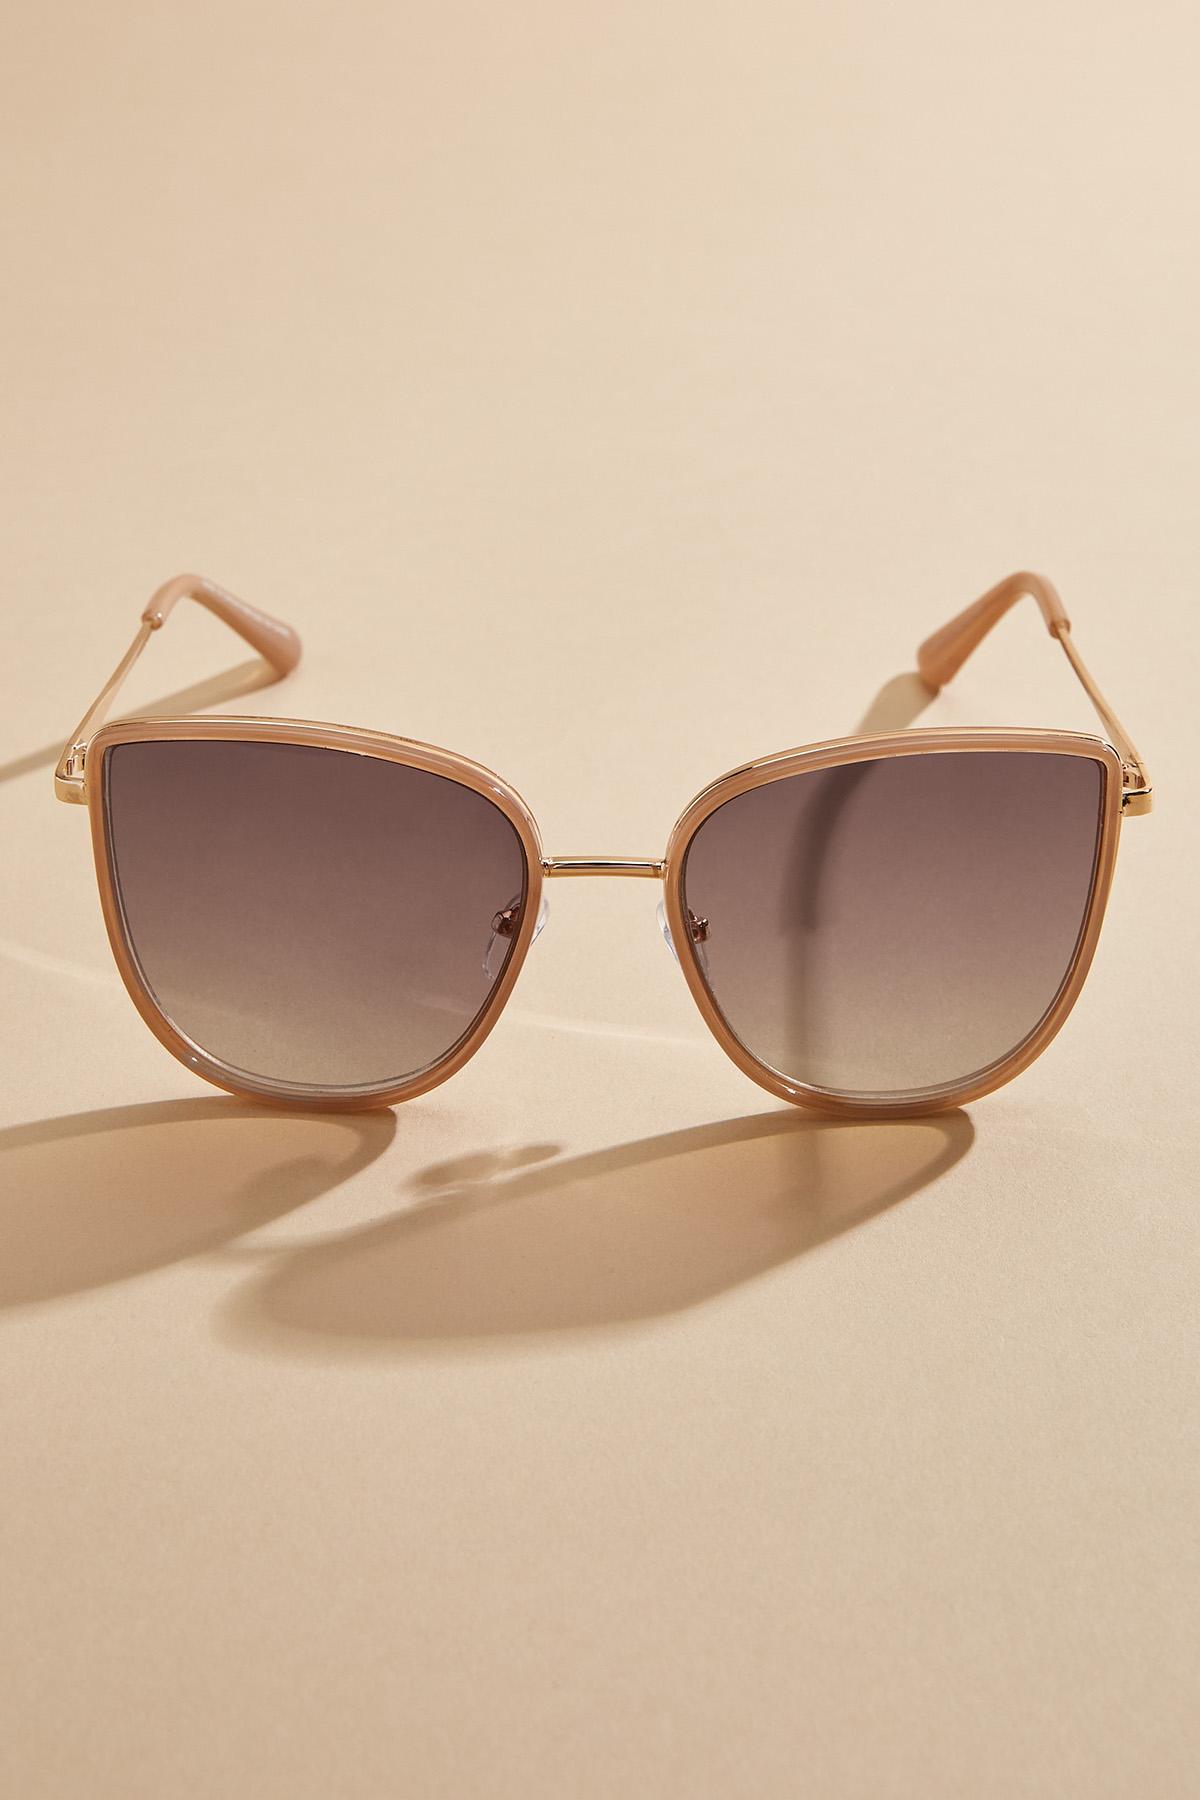 sleek cat eye sunglasses